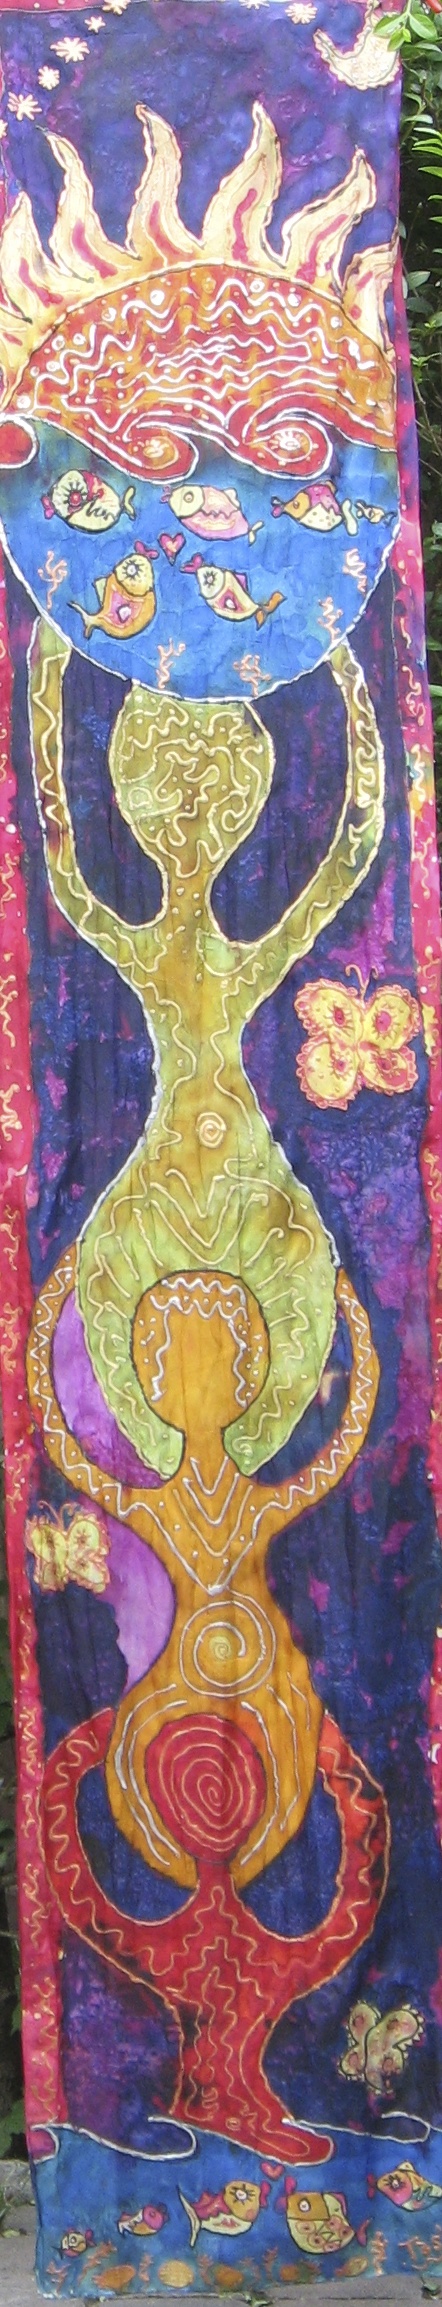 Whimsical art silk painting banner / scarf by Tasha Paley